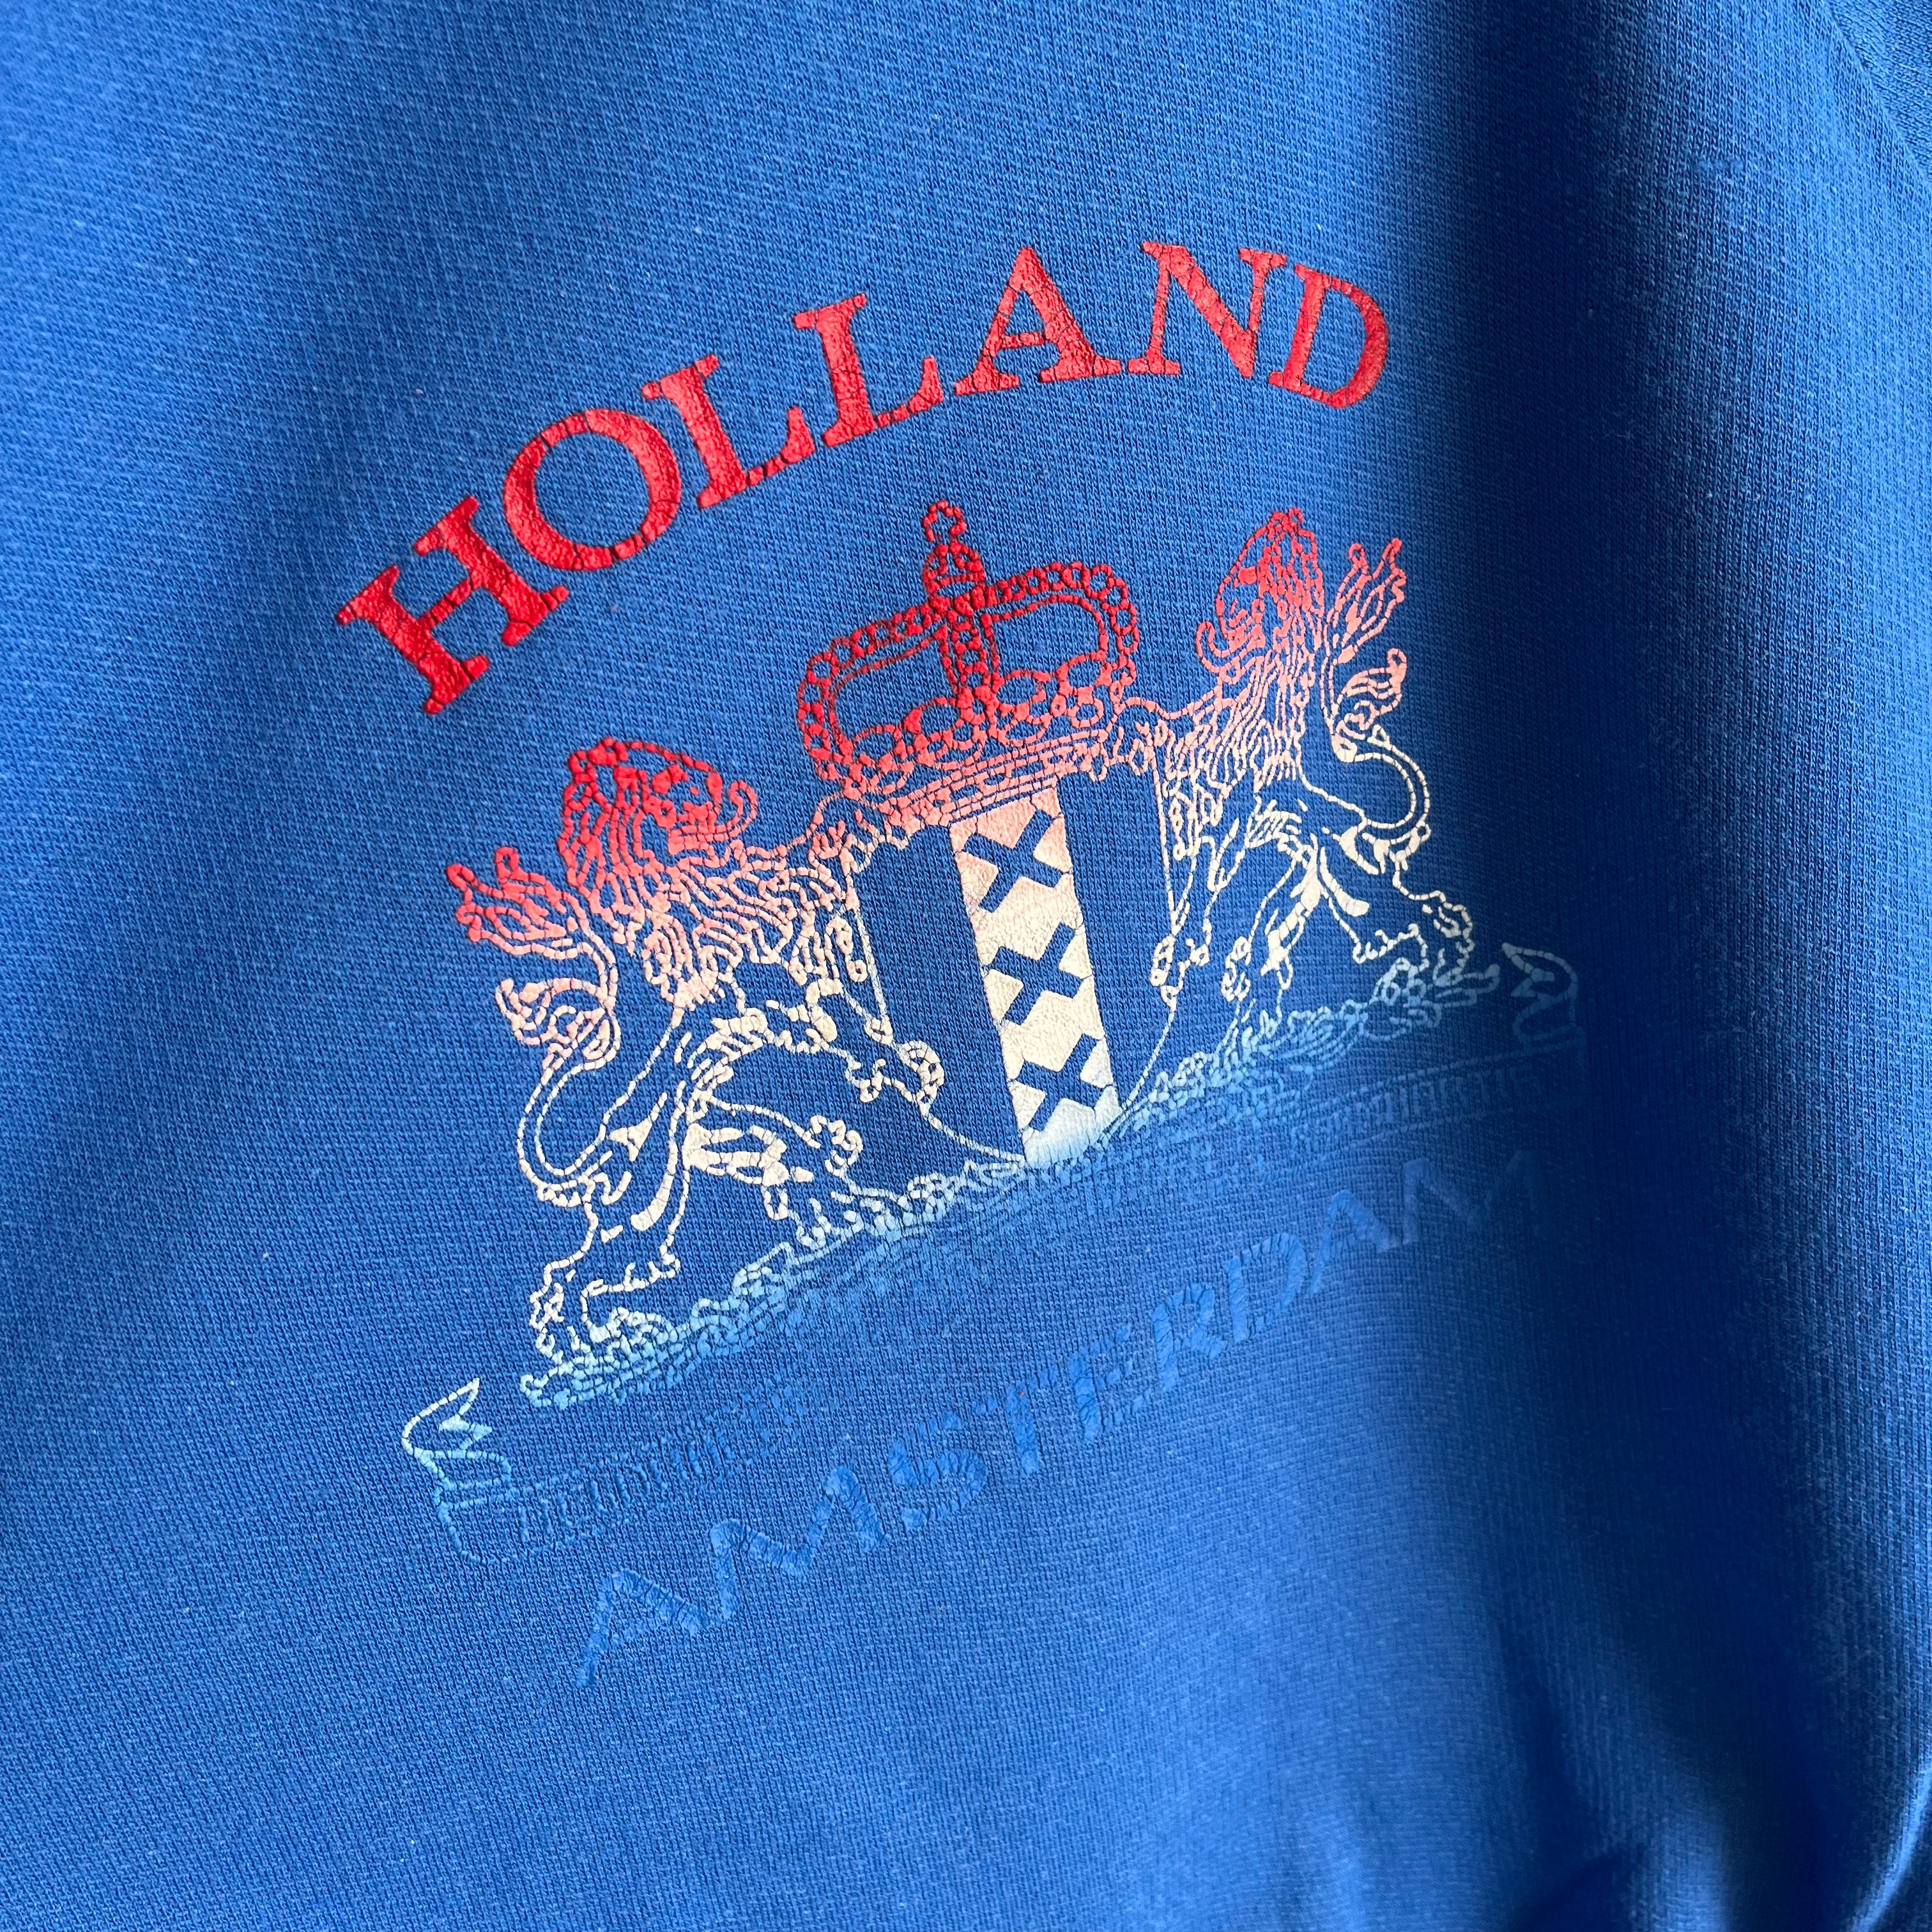 1980s Holland Amsterdam Tourist - Made In Italy - Sweatshirt